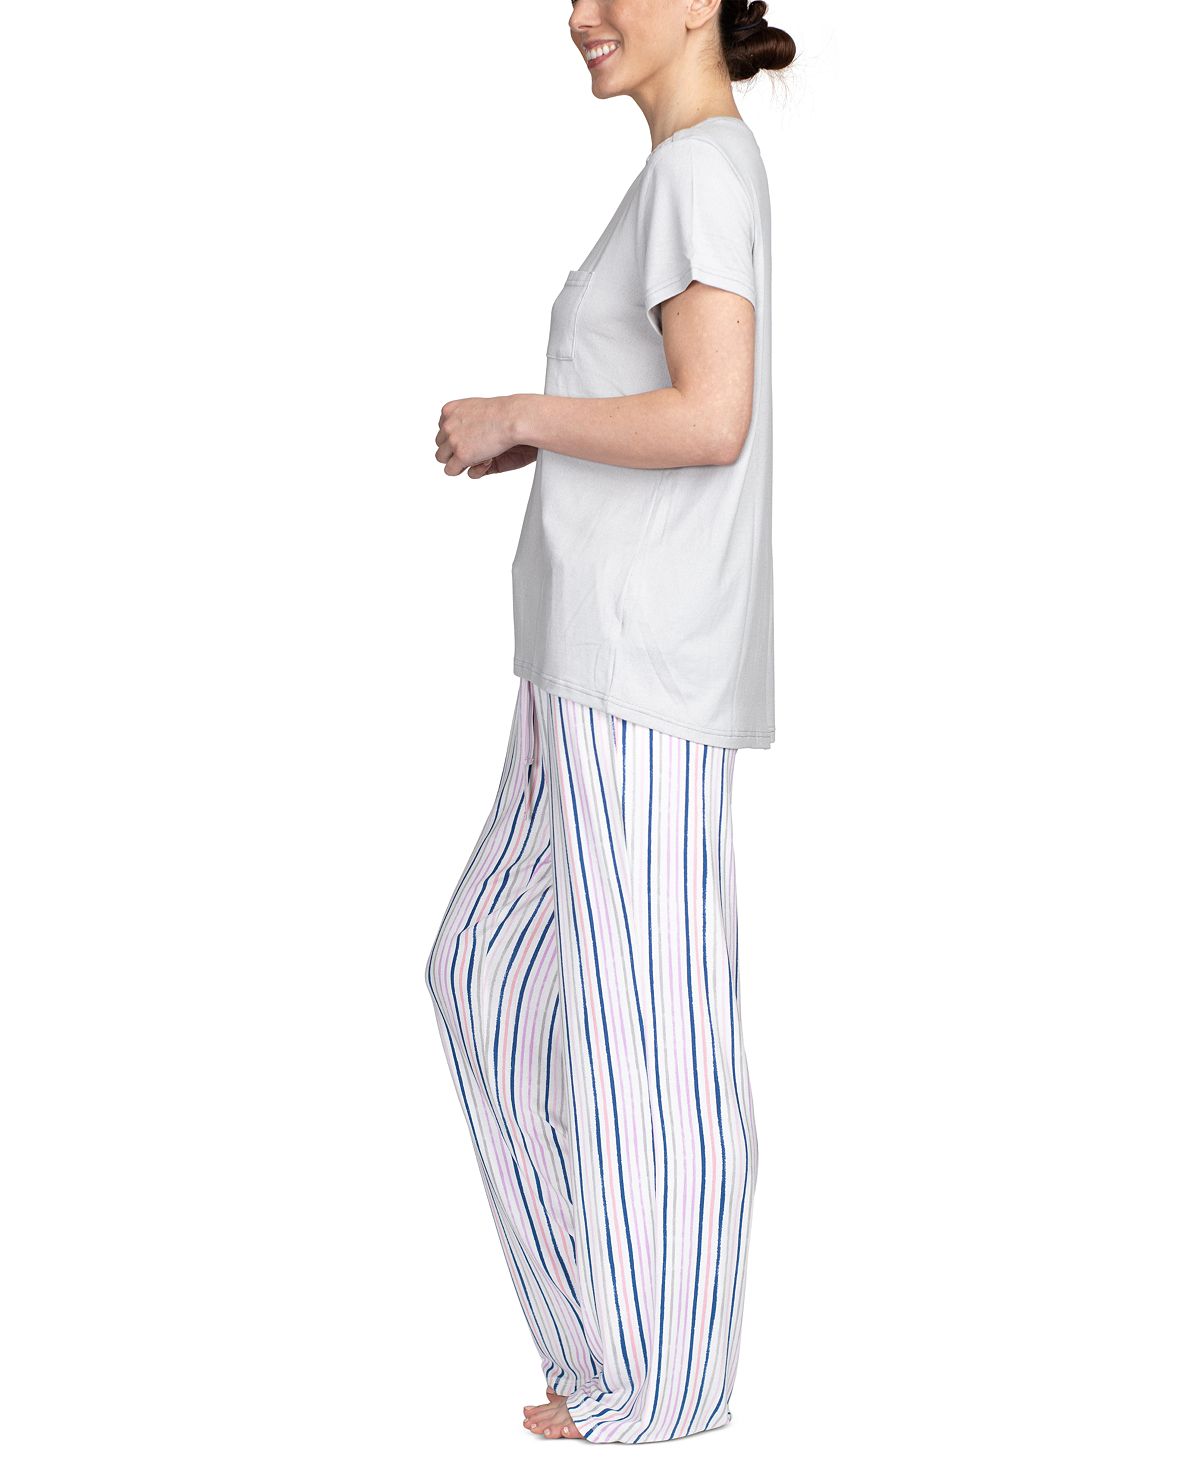 Hanes Wo 2pc Pajama Set Gray/stripe